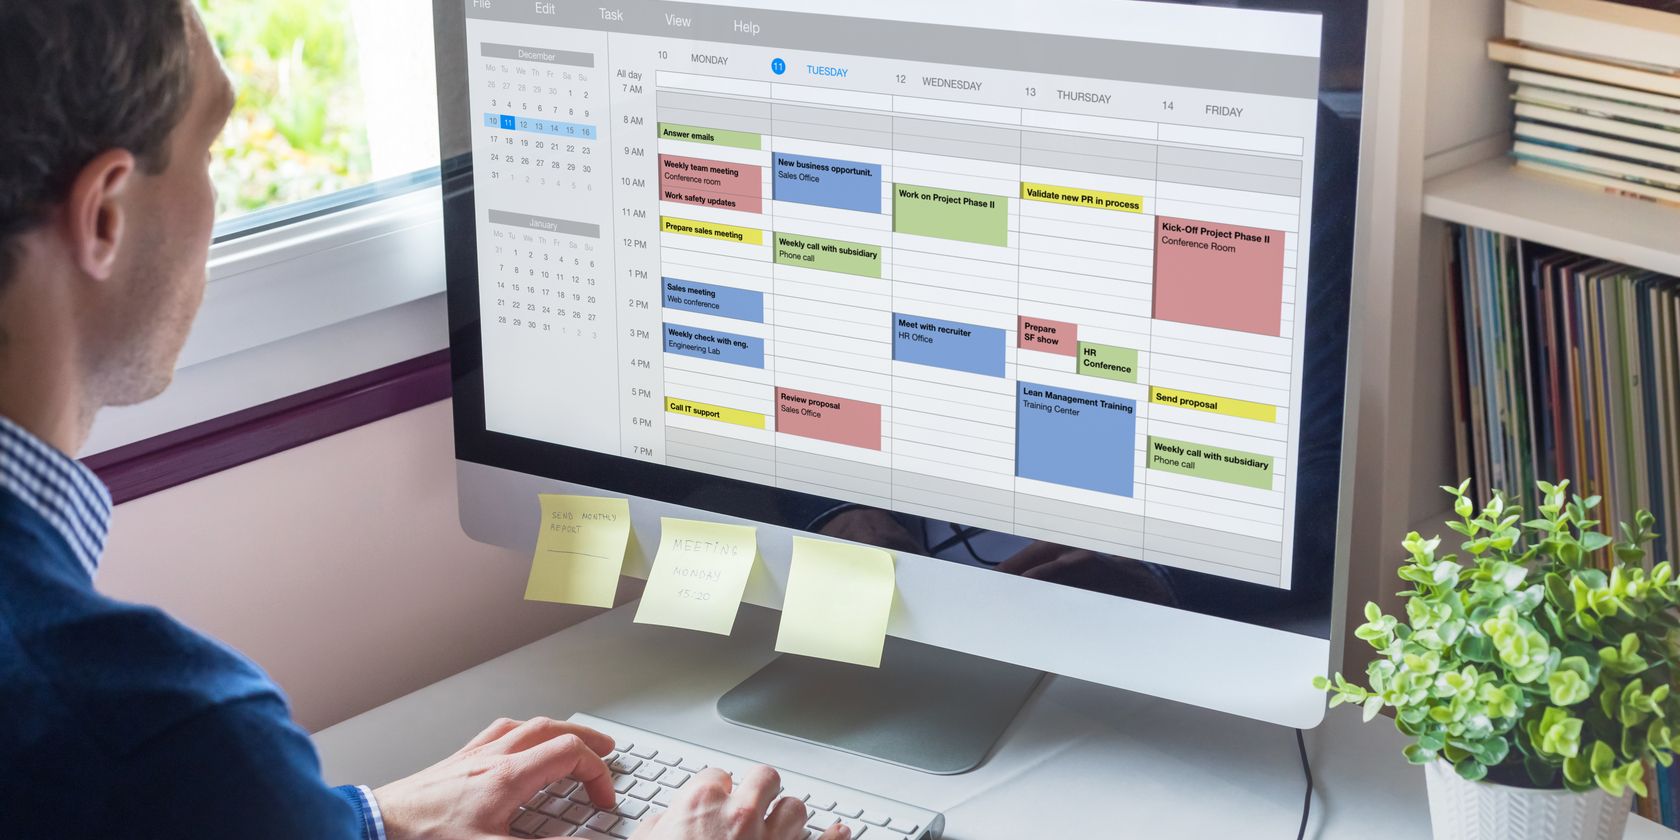 You Can Now Schedule Meetings in Microsoft Teams